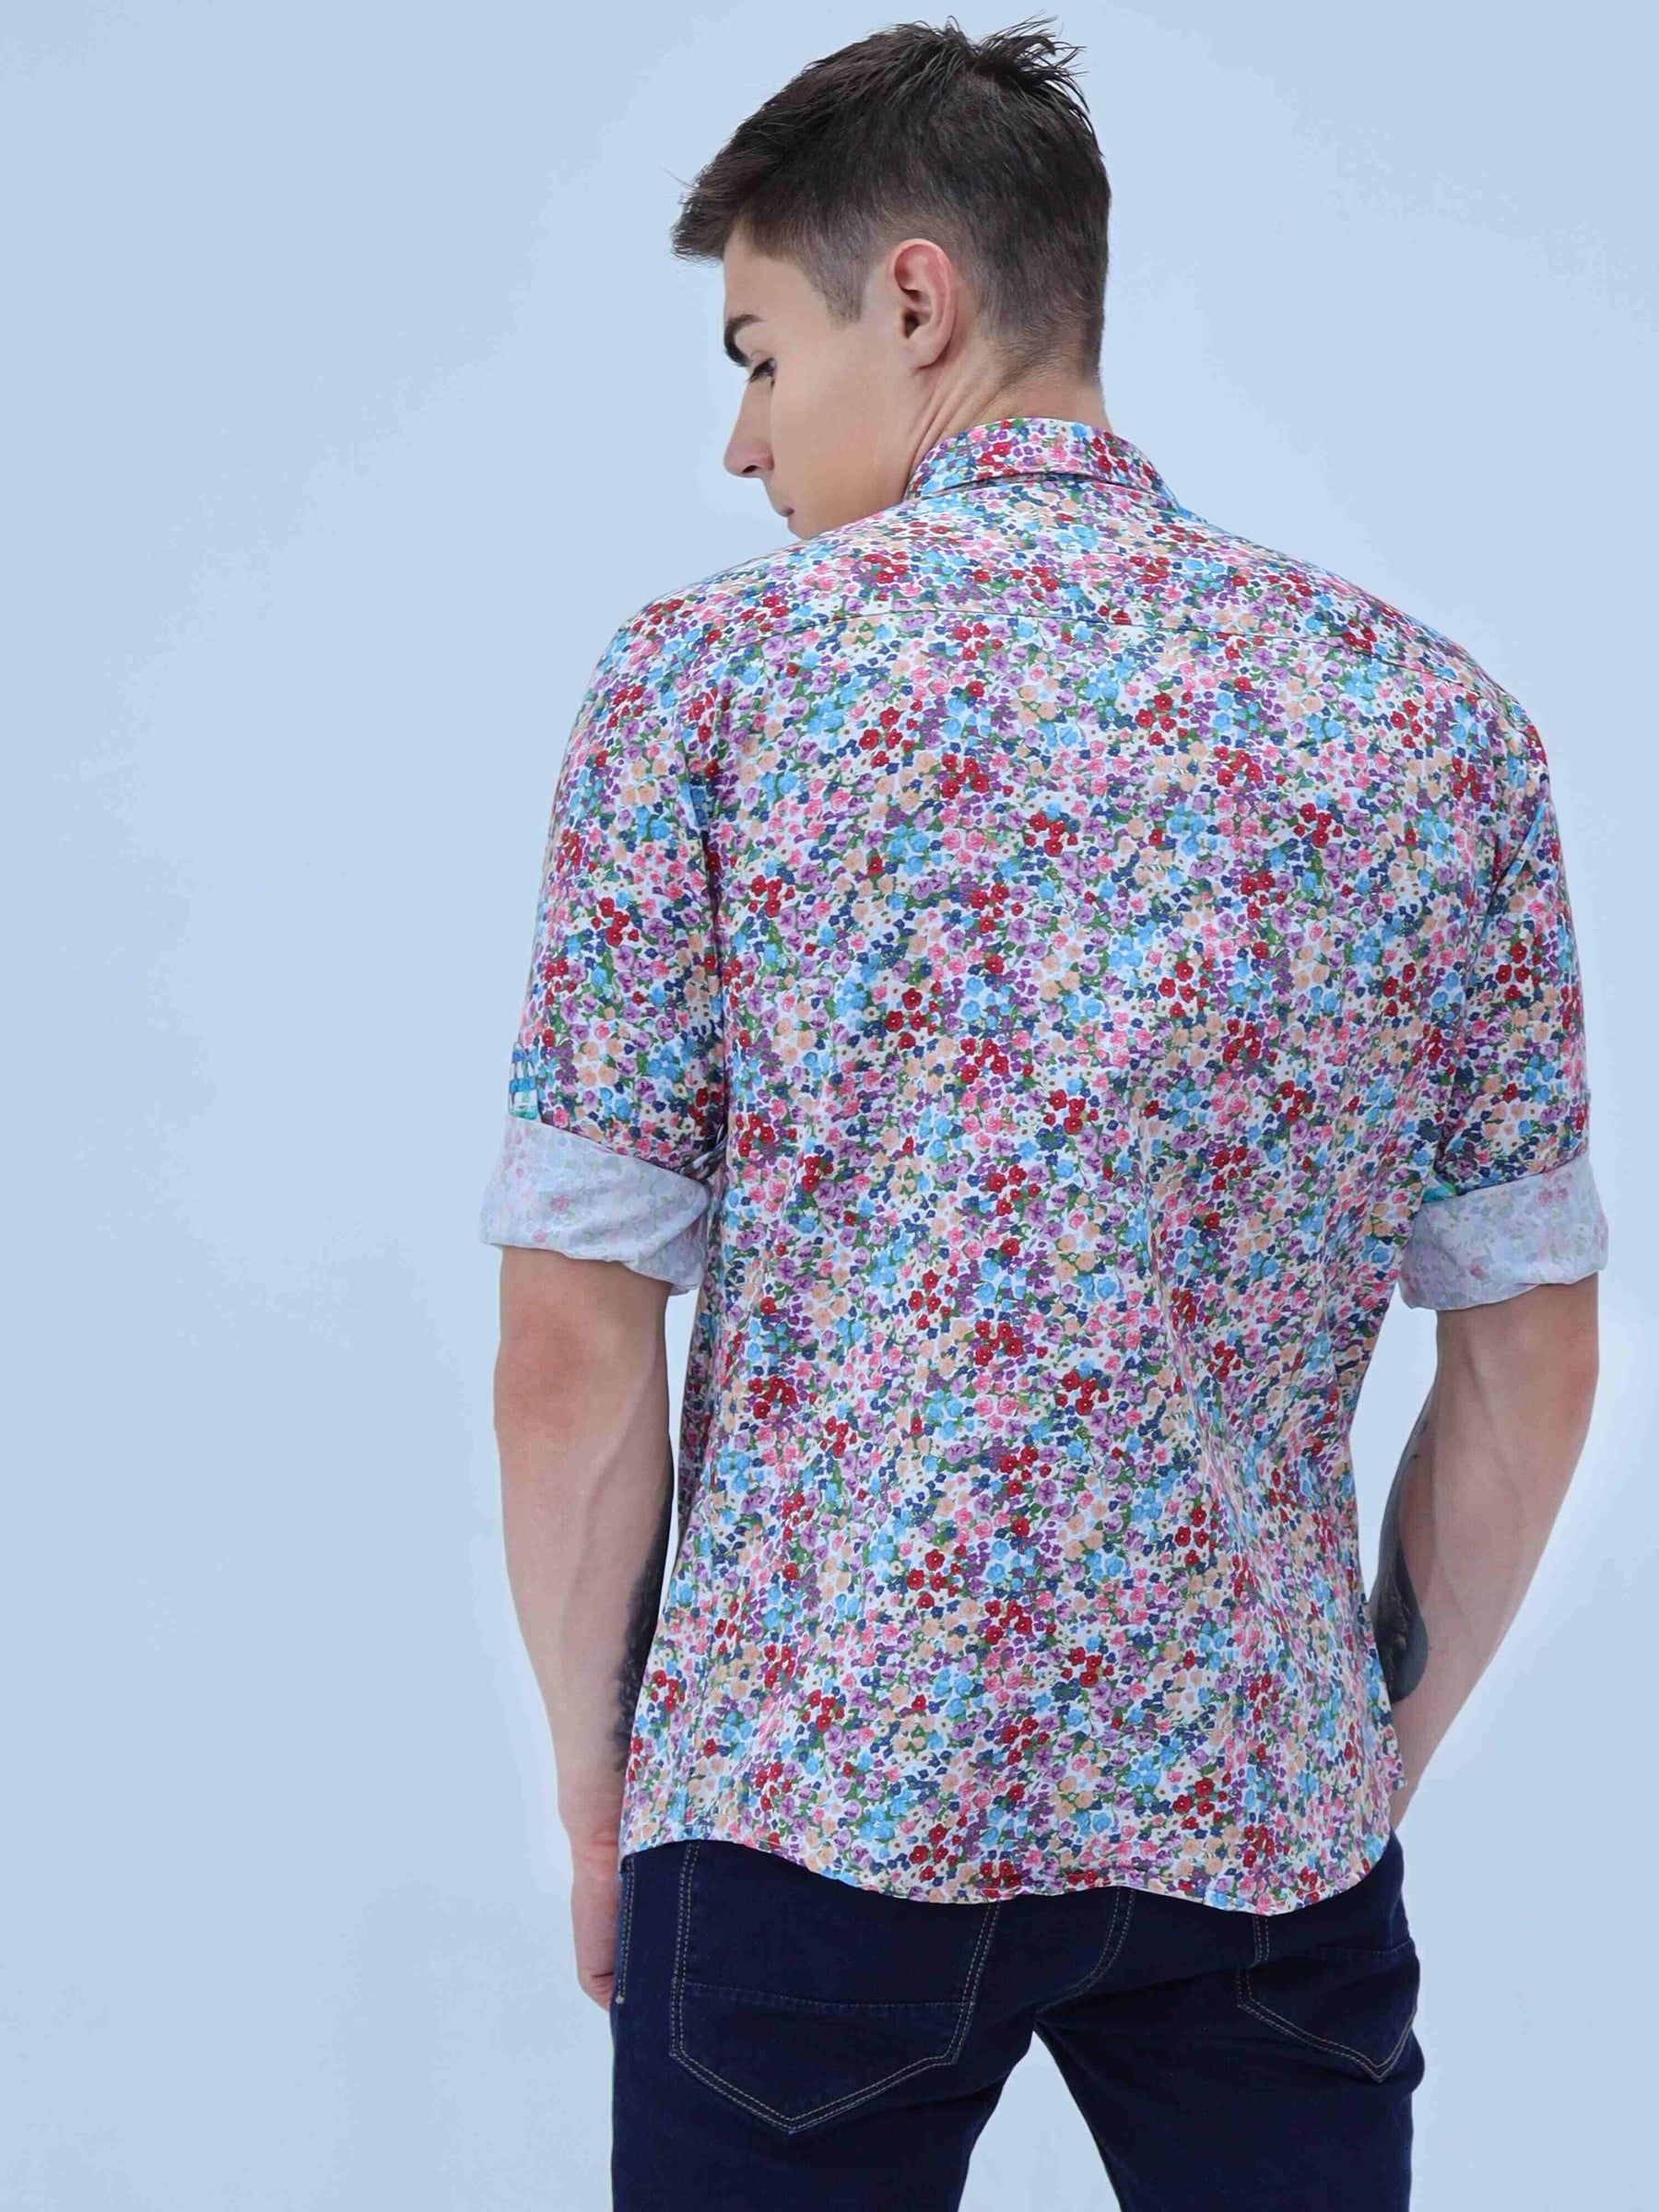 Rouge Flora Digital Printed Full Shirt - Guniaa Fashions